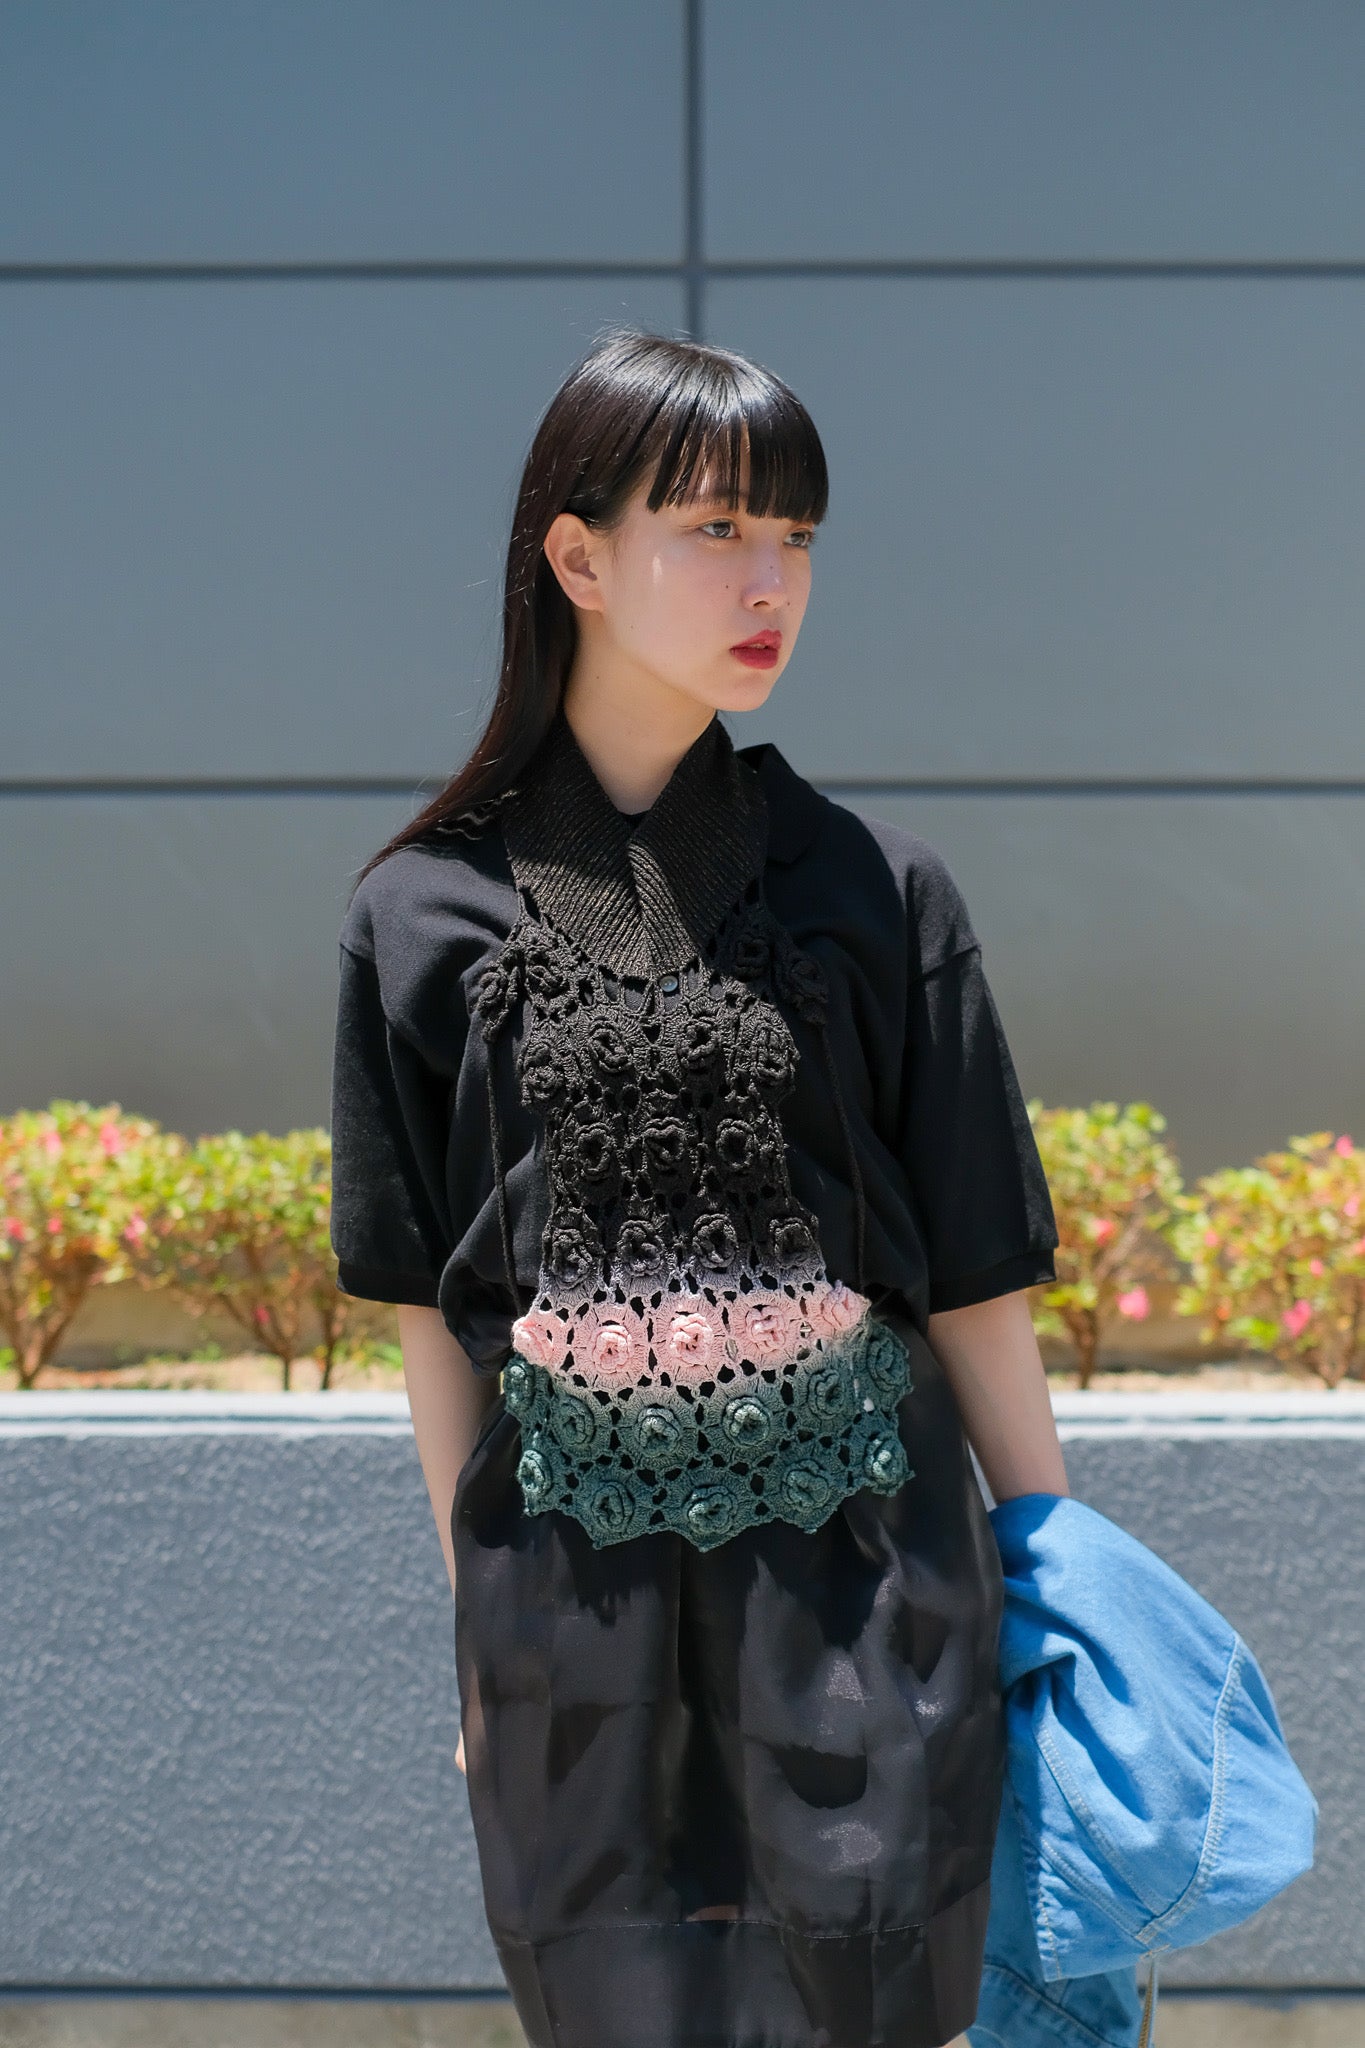 tiit tokyo gradation dye knit topsを使用したスタイリング画像